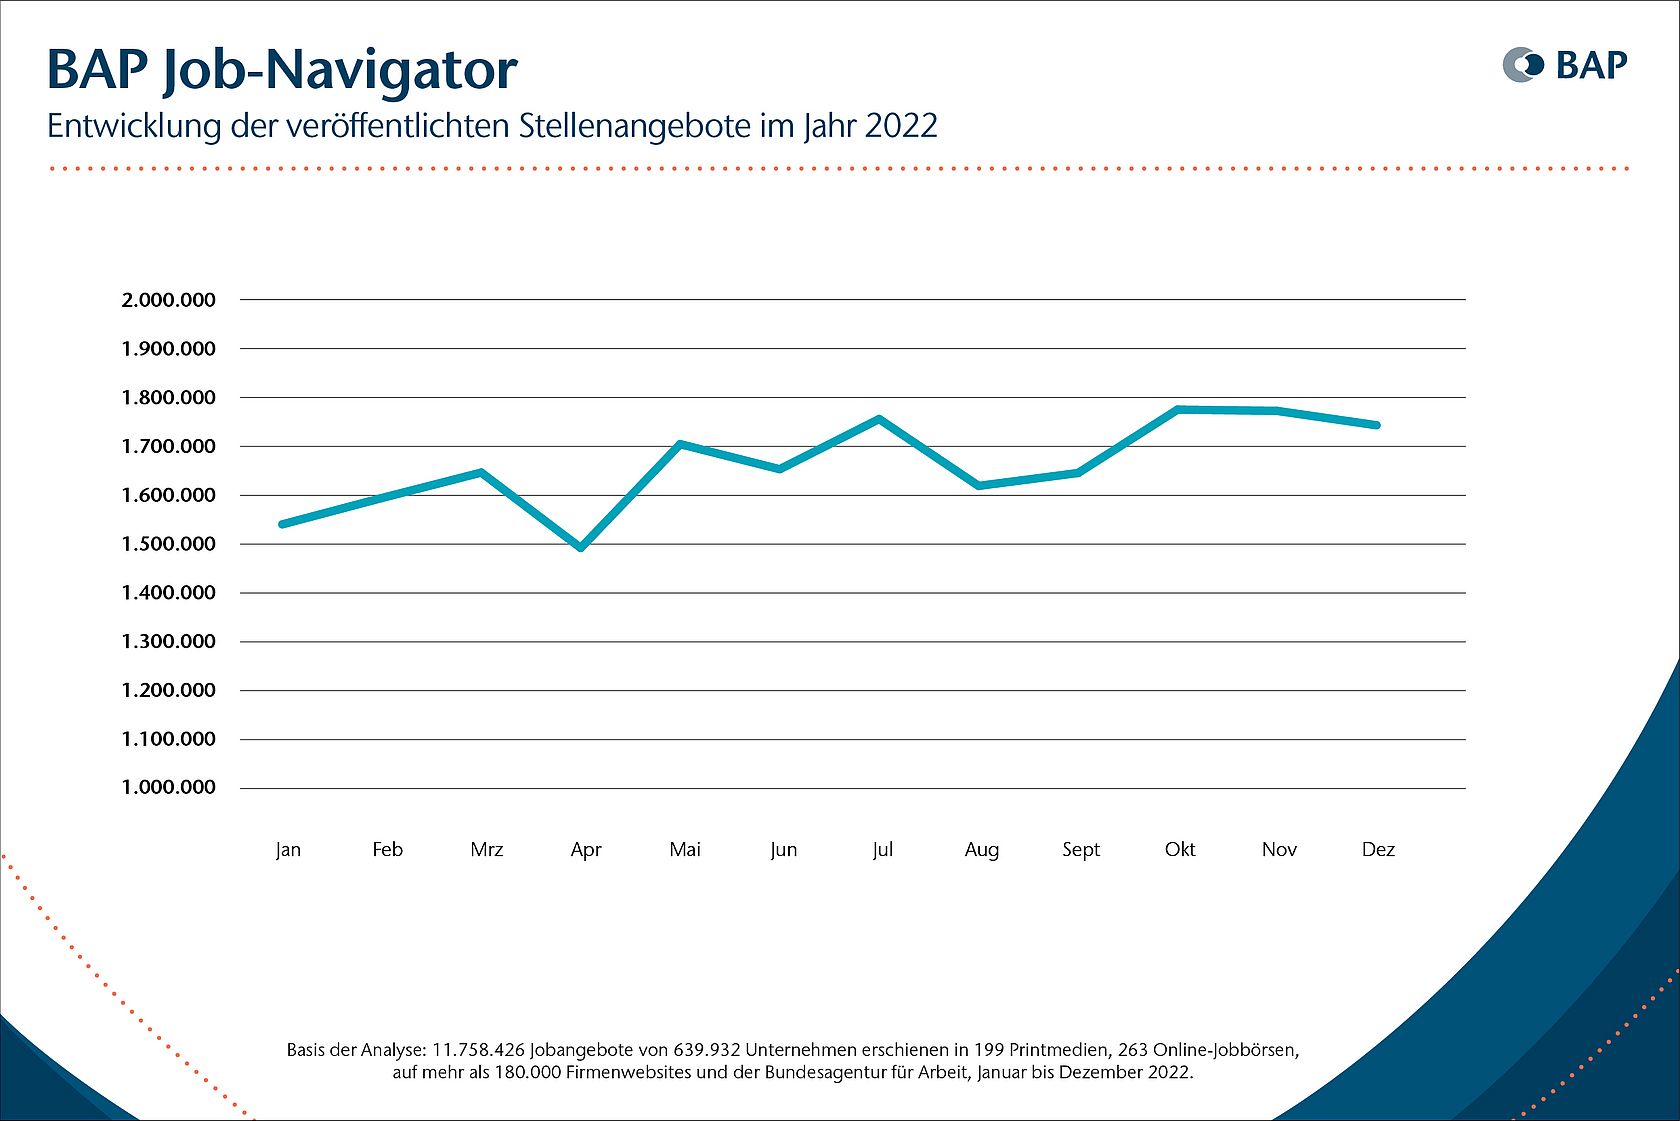 Jahresrückblick BAP Job-Navigator: Zahl ausgeschriebener Stellen wächst trotz aller Krisen